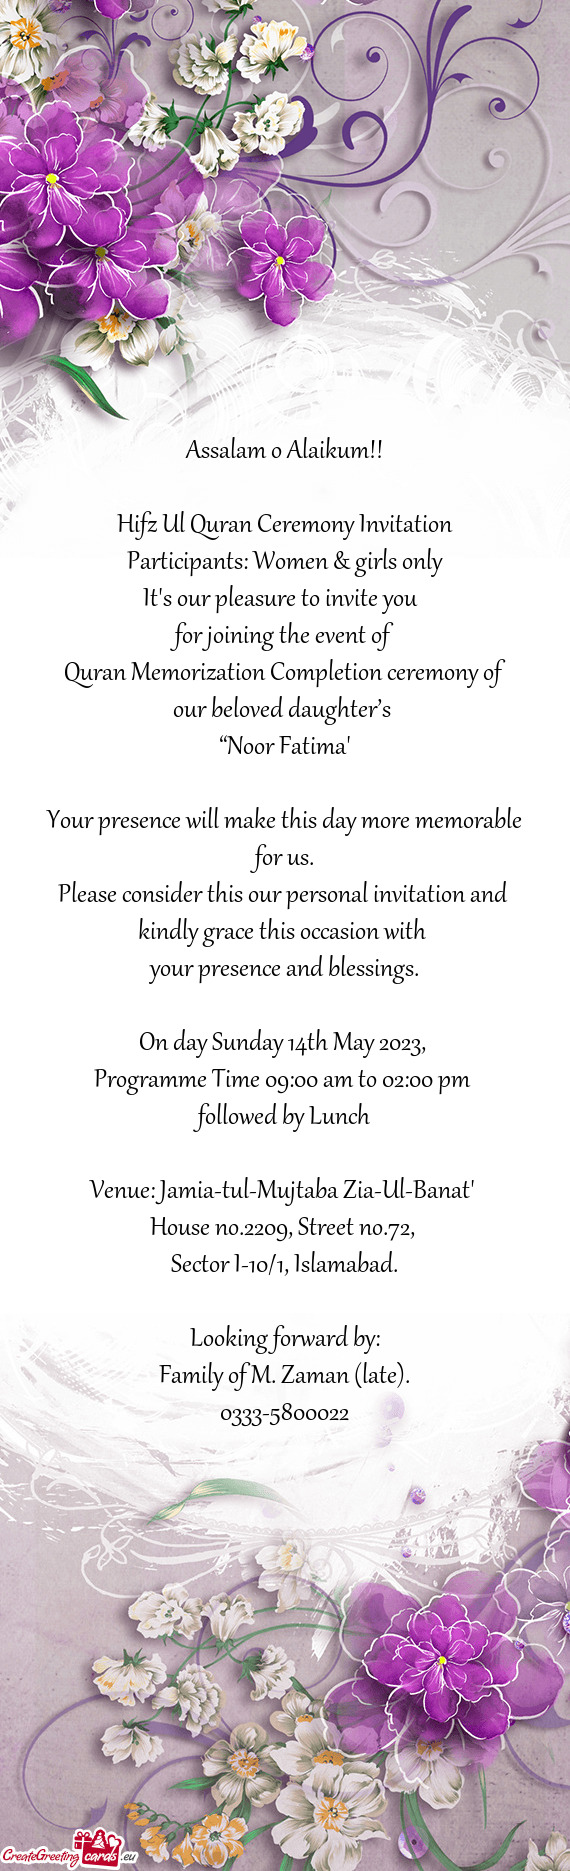 Hifz Ul Quran Ceremony Invitation